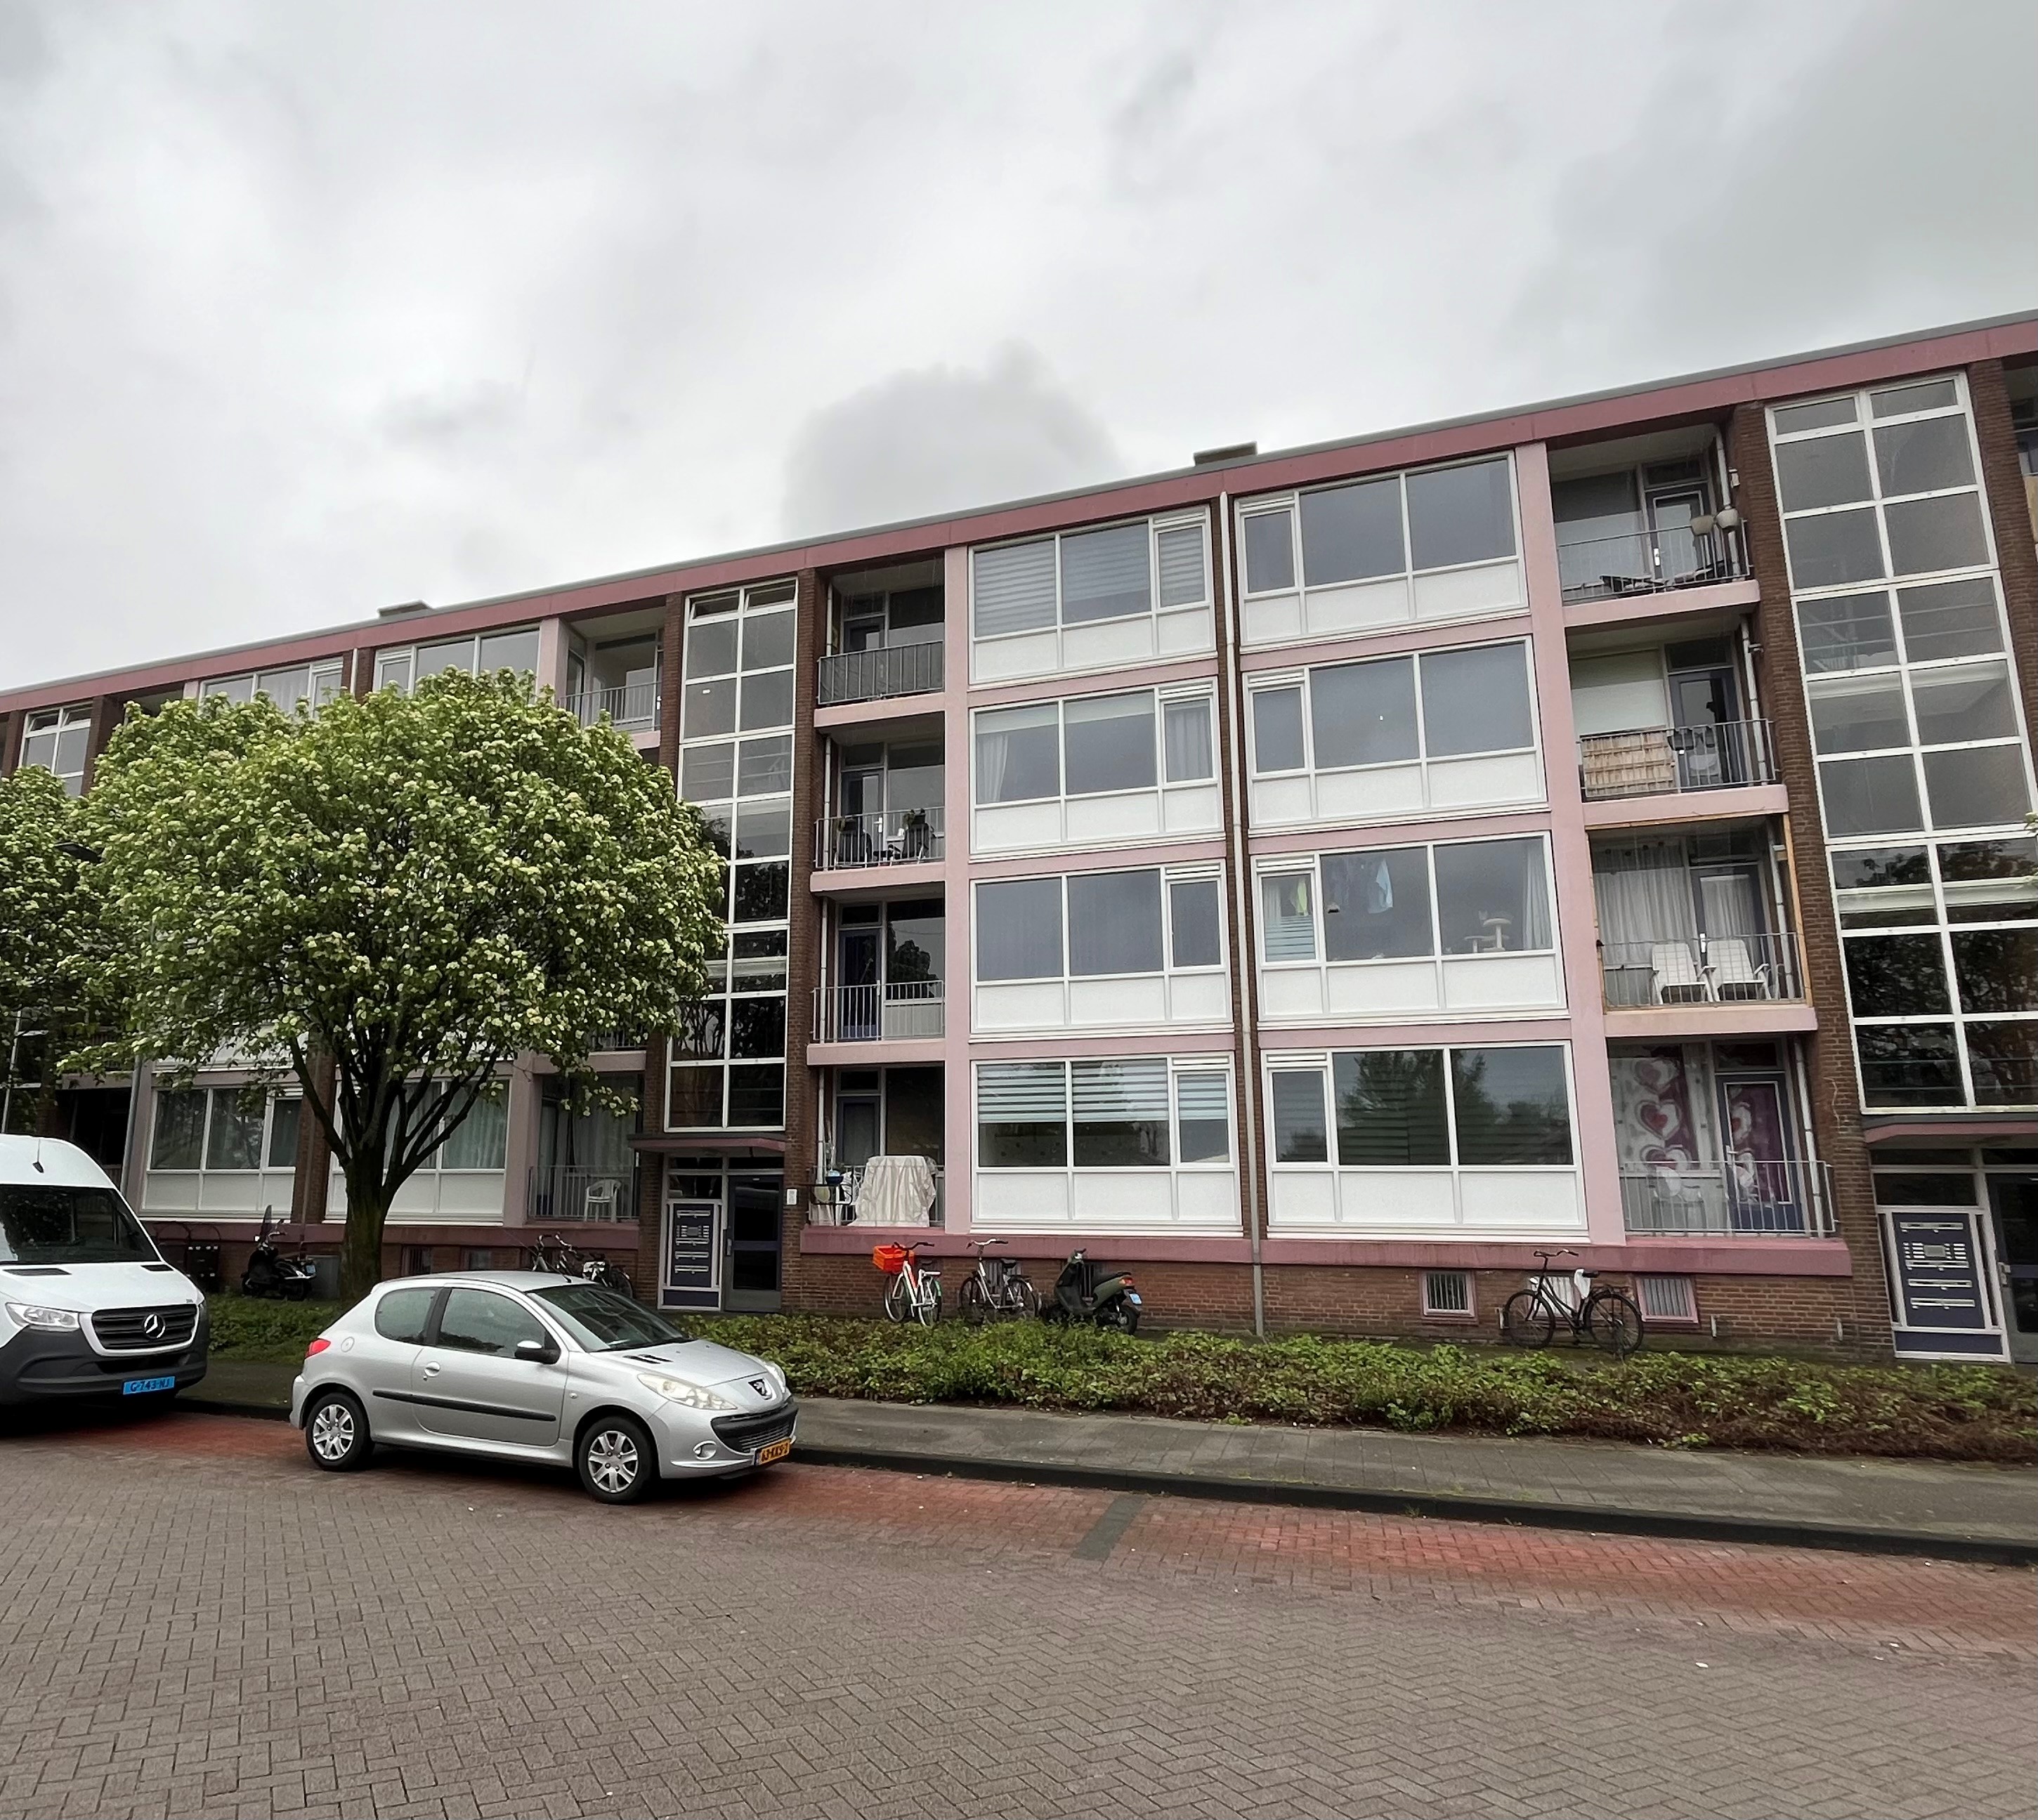 Kloosstraat 173, 7002 BT Doetinchem, Nederland